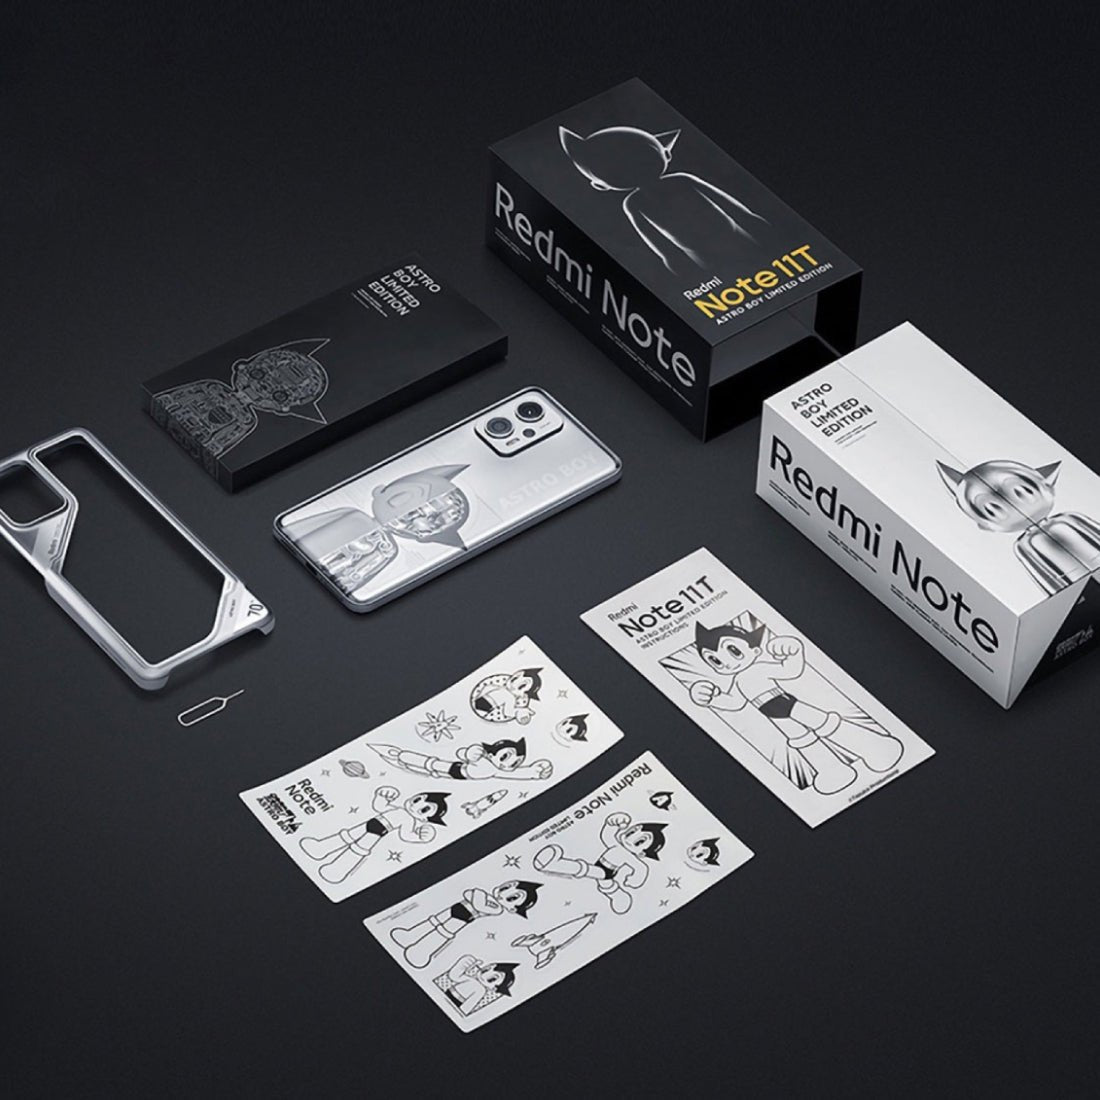 Redmi Note 11T Pro Plus 8GB RAM 256GB 5G - Astro Boy Edition - Store 974 | ستور ٩٧٤